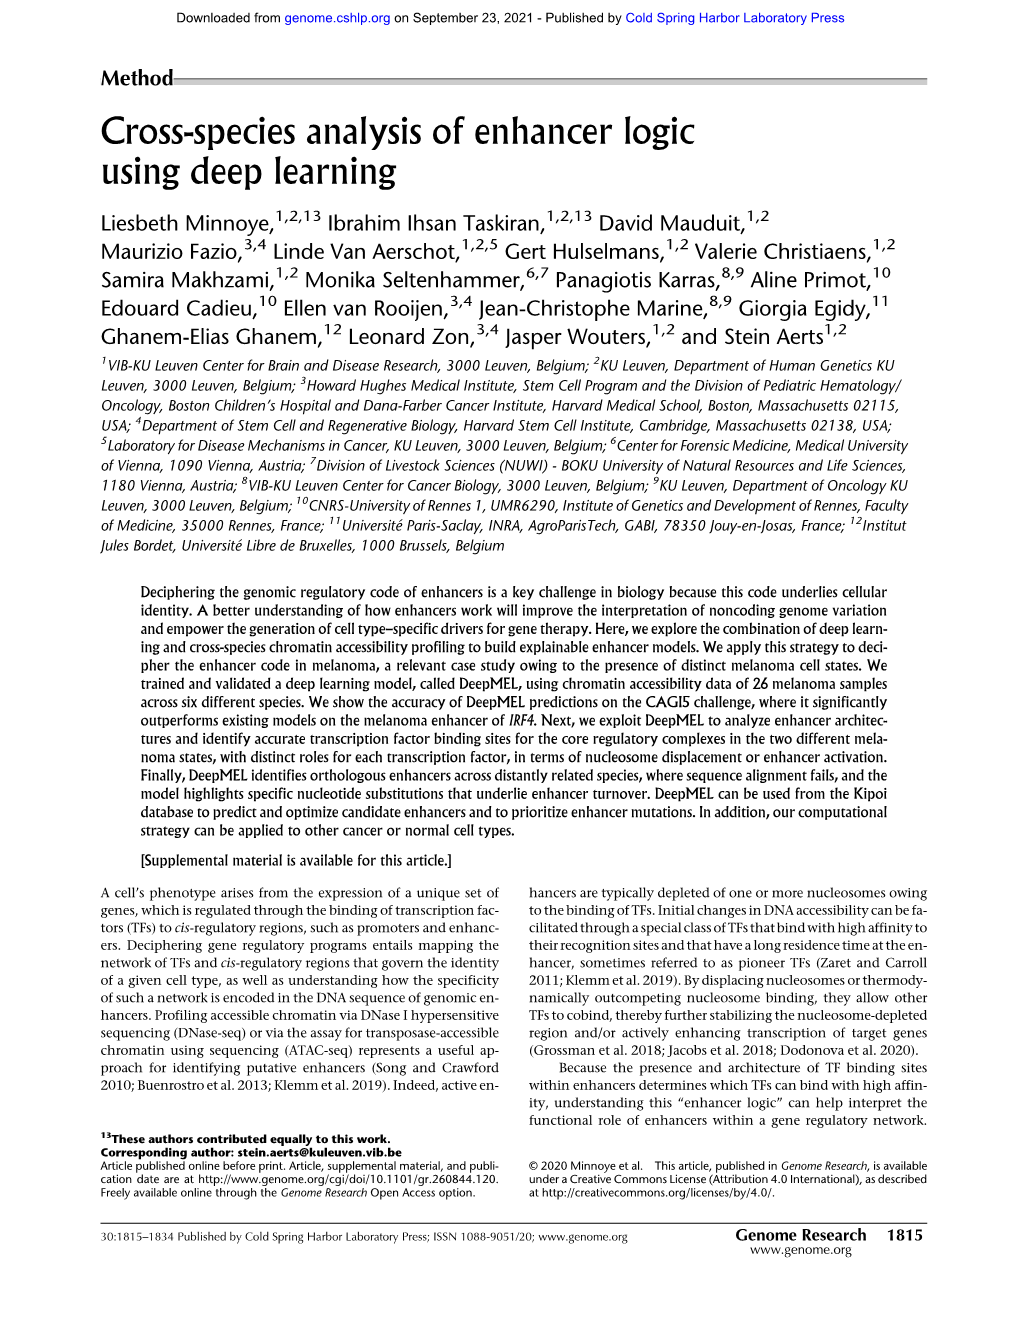 Cross-Species Analysis of Enhancer Logic Using Deep Learning